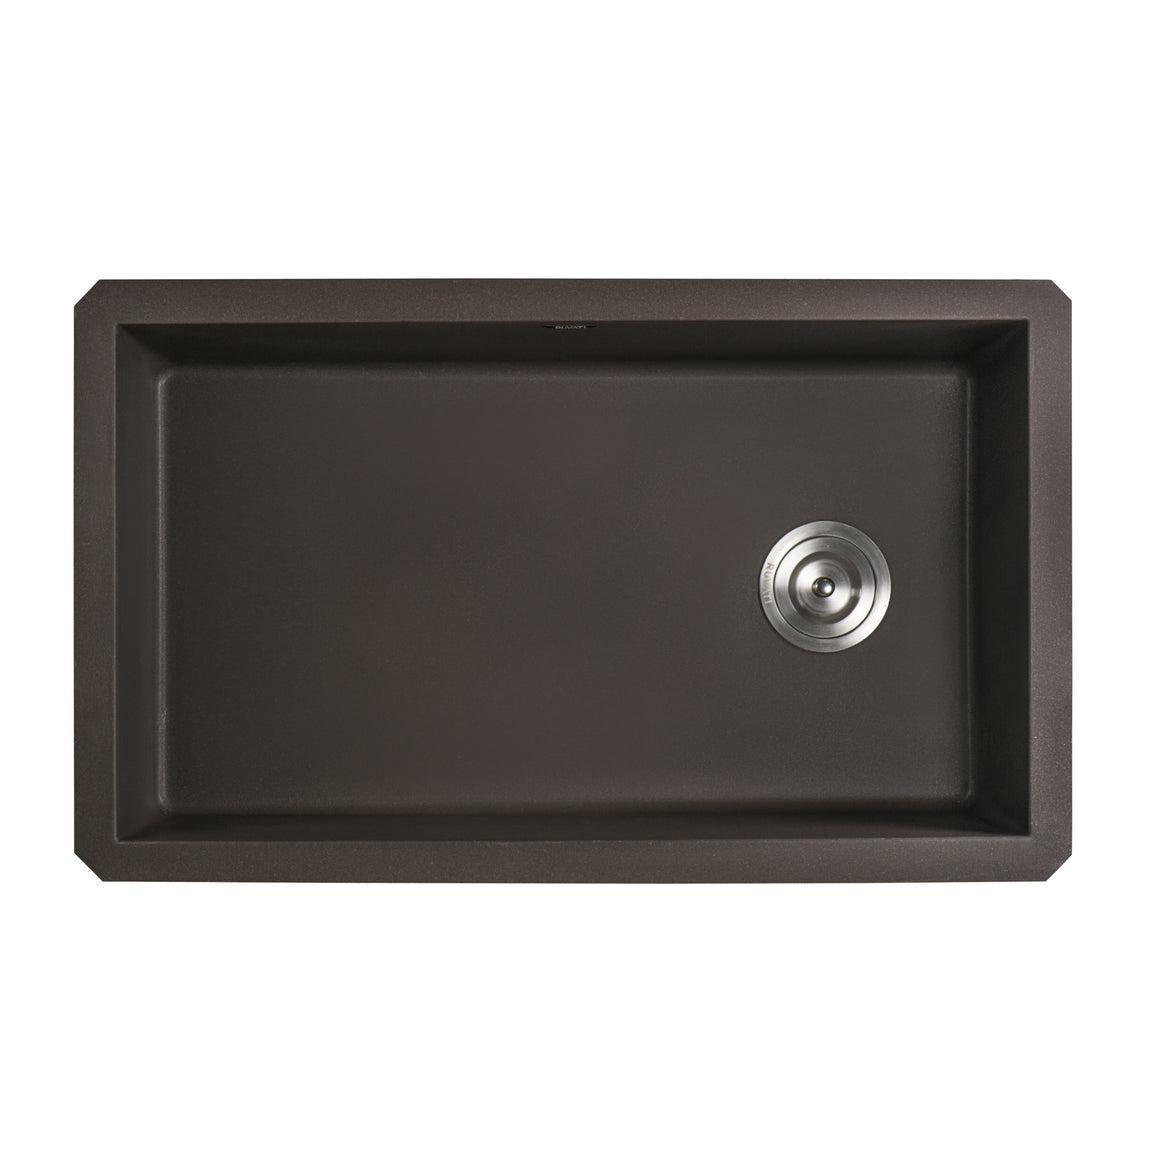 Ruvati 31 x 19 inch epiGranite Undermount Granite Composite Single Bowl Kitchen Sink - Espresso Brown - RVG2033ES